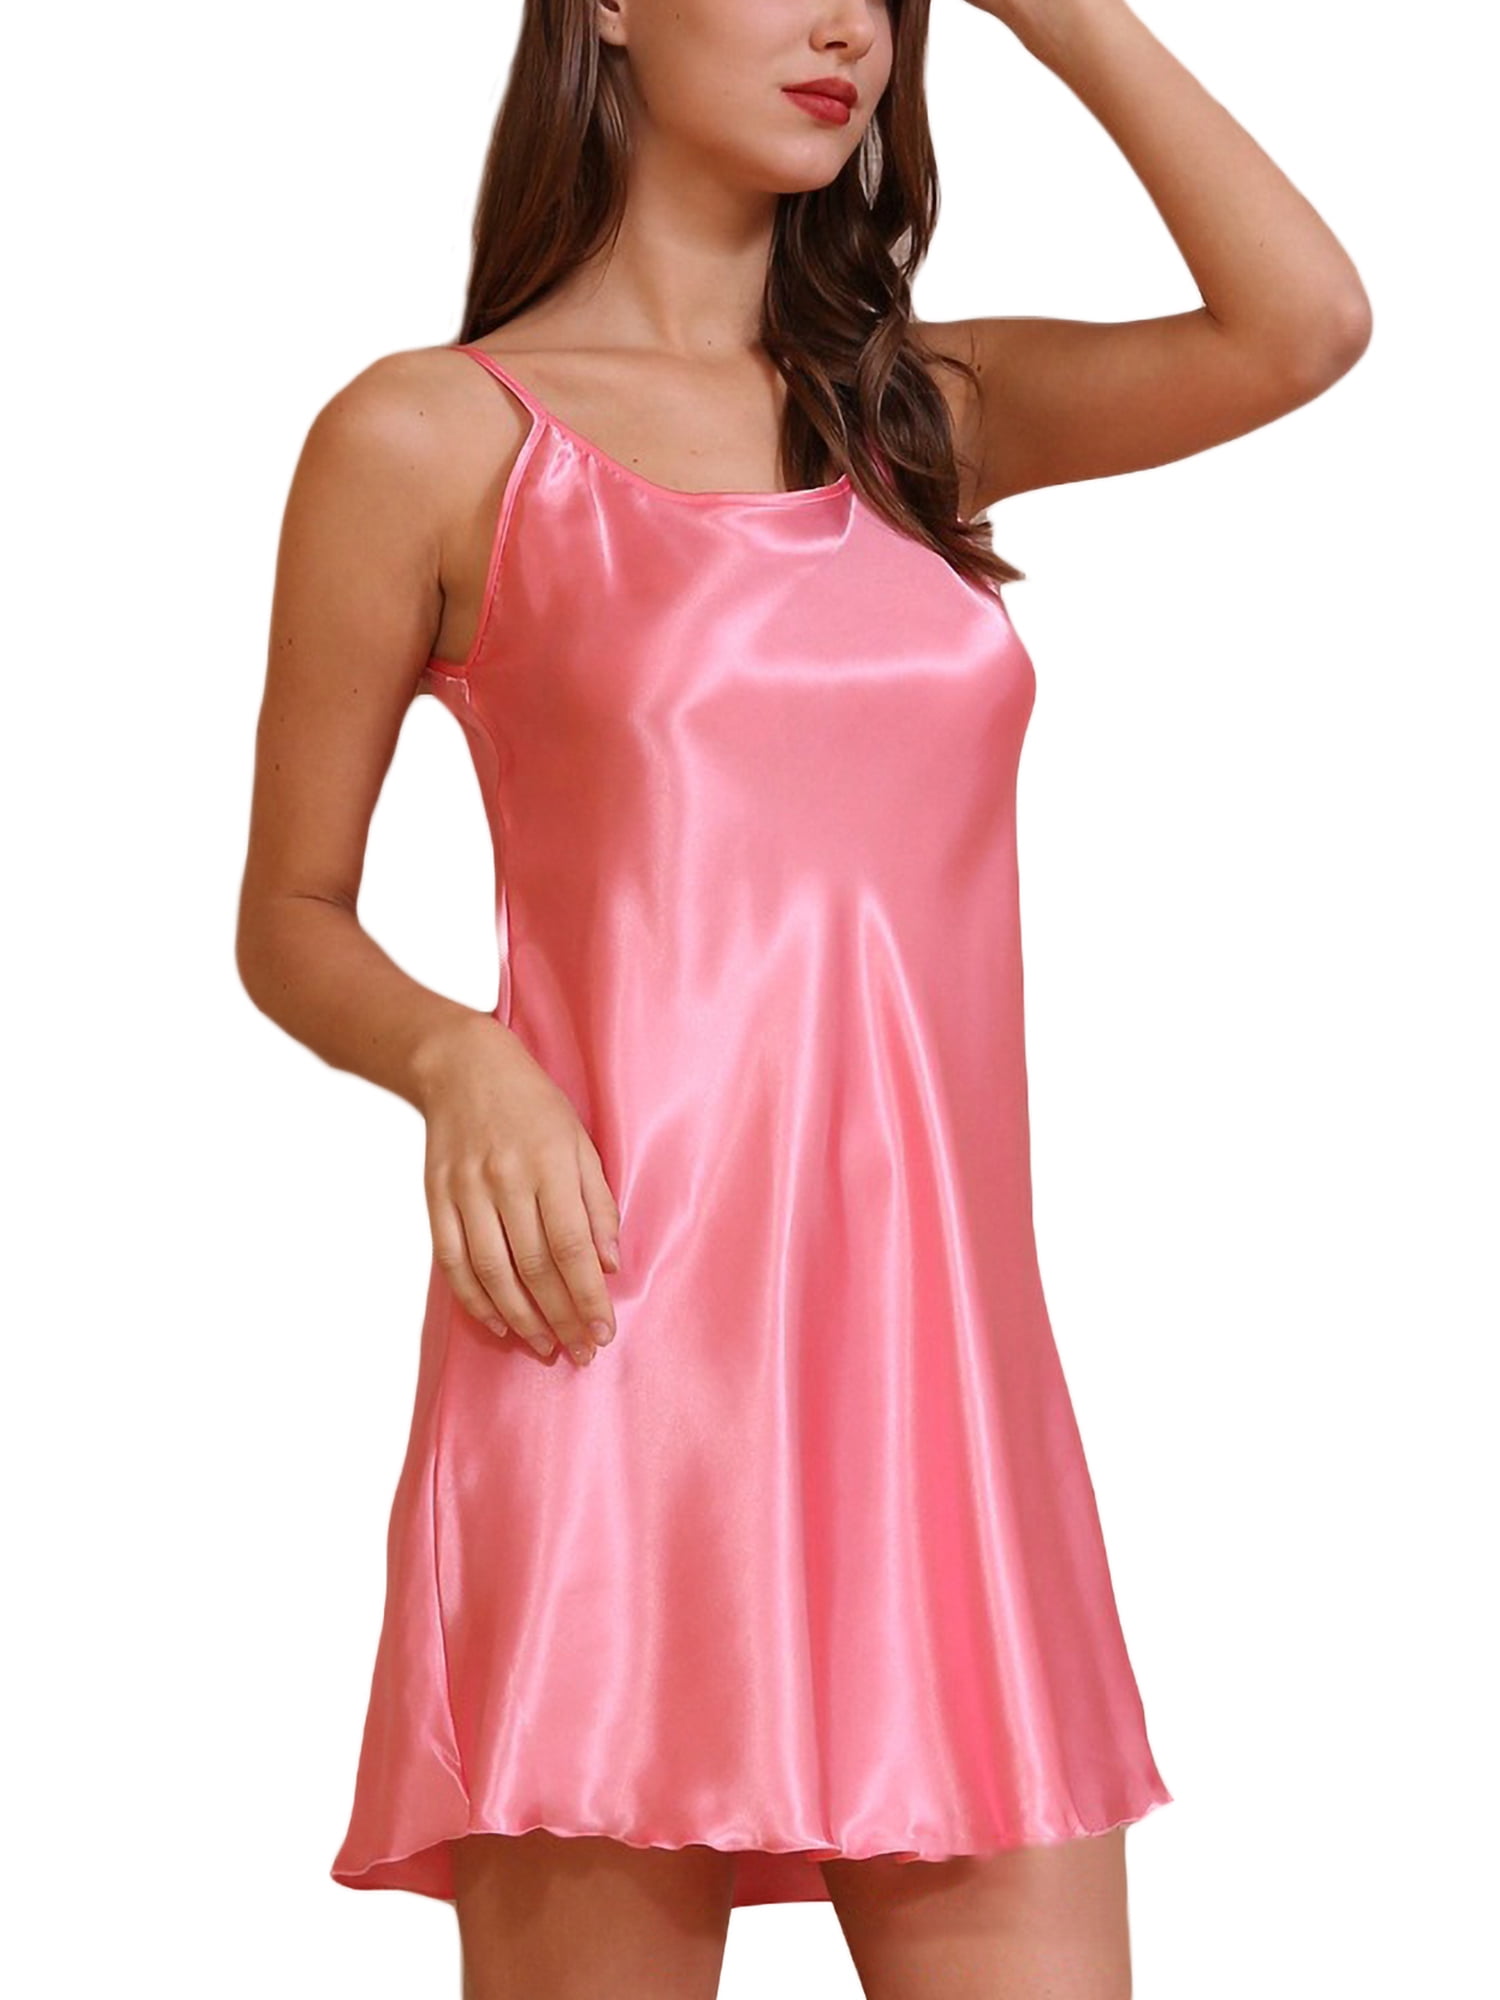 Polly Online Womens Pajamas Satin Nightgown Mini Slip Sleepwear Short Nightwear Camisole Dress